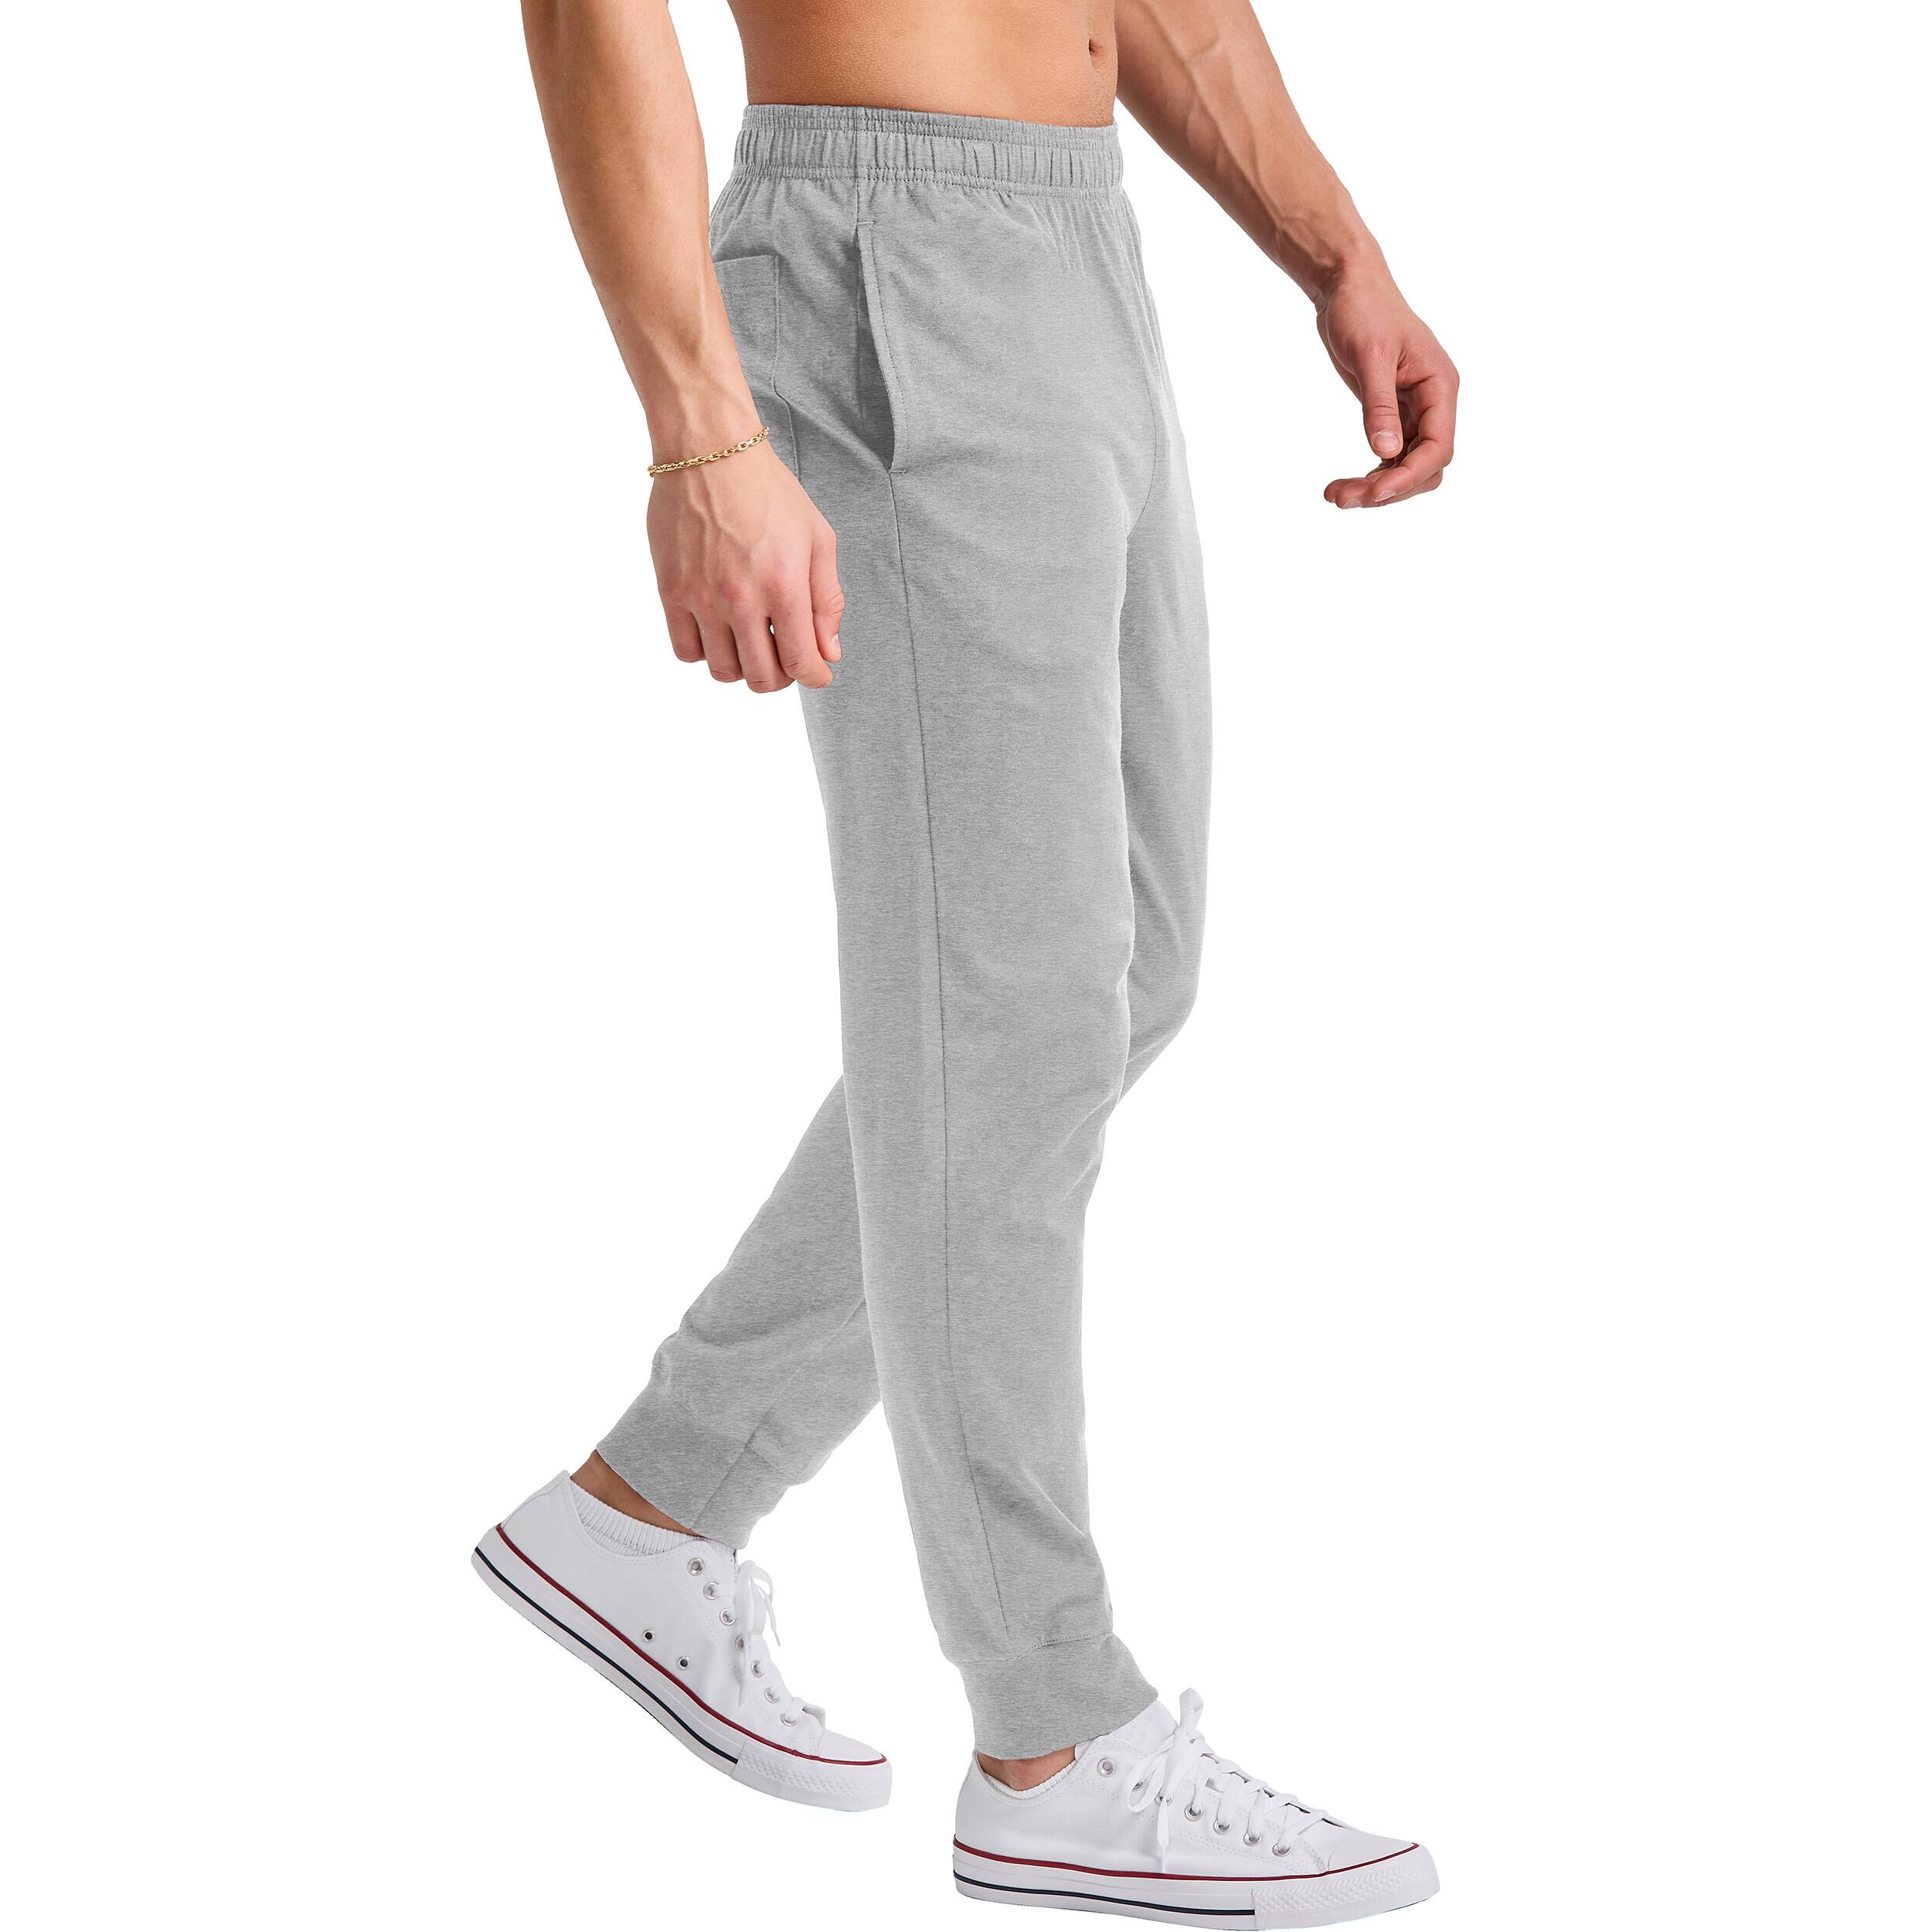 Hanes Women's Originals Cotton Joggers, Jersey Sweatpants for Women, 29  Inseam